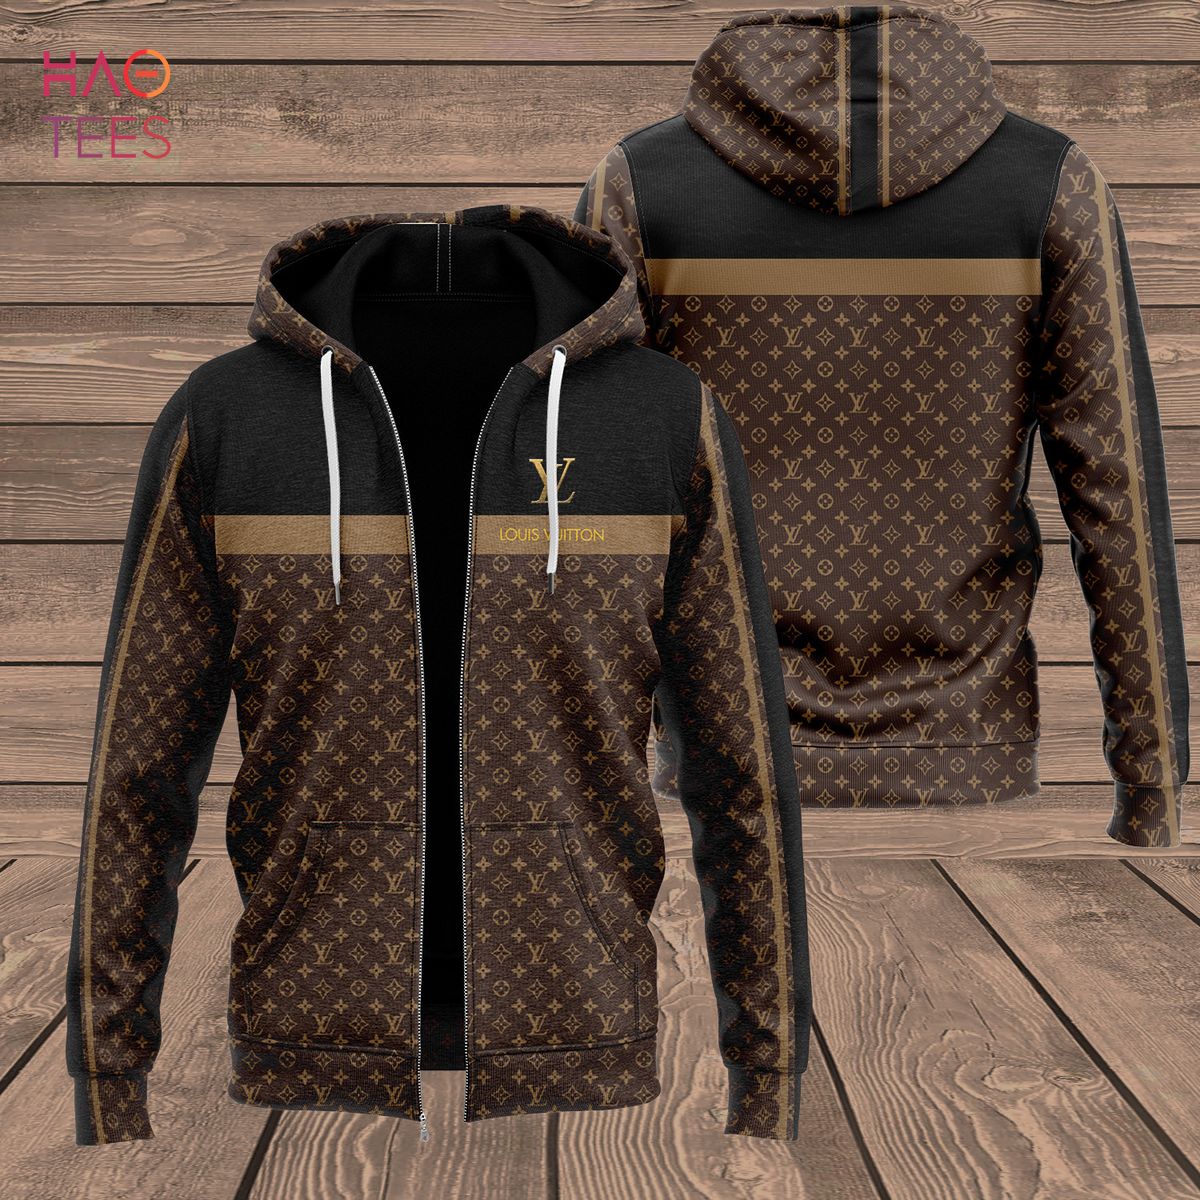 TM x LV brown color hoodie hot trend for men